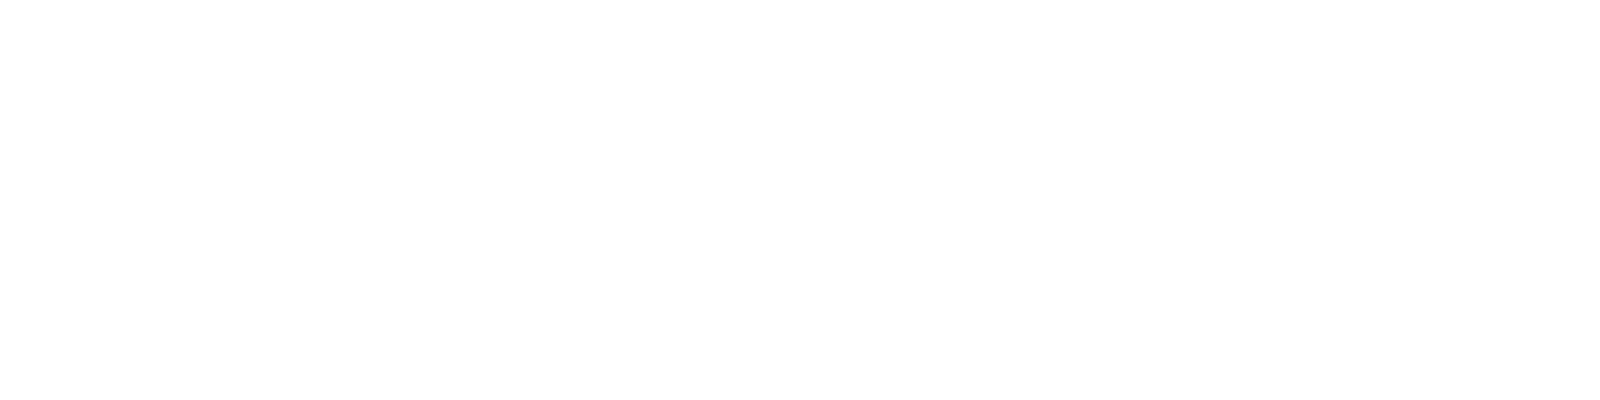 Yolanda L. Taylor Law Firm, PLLC